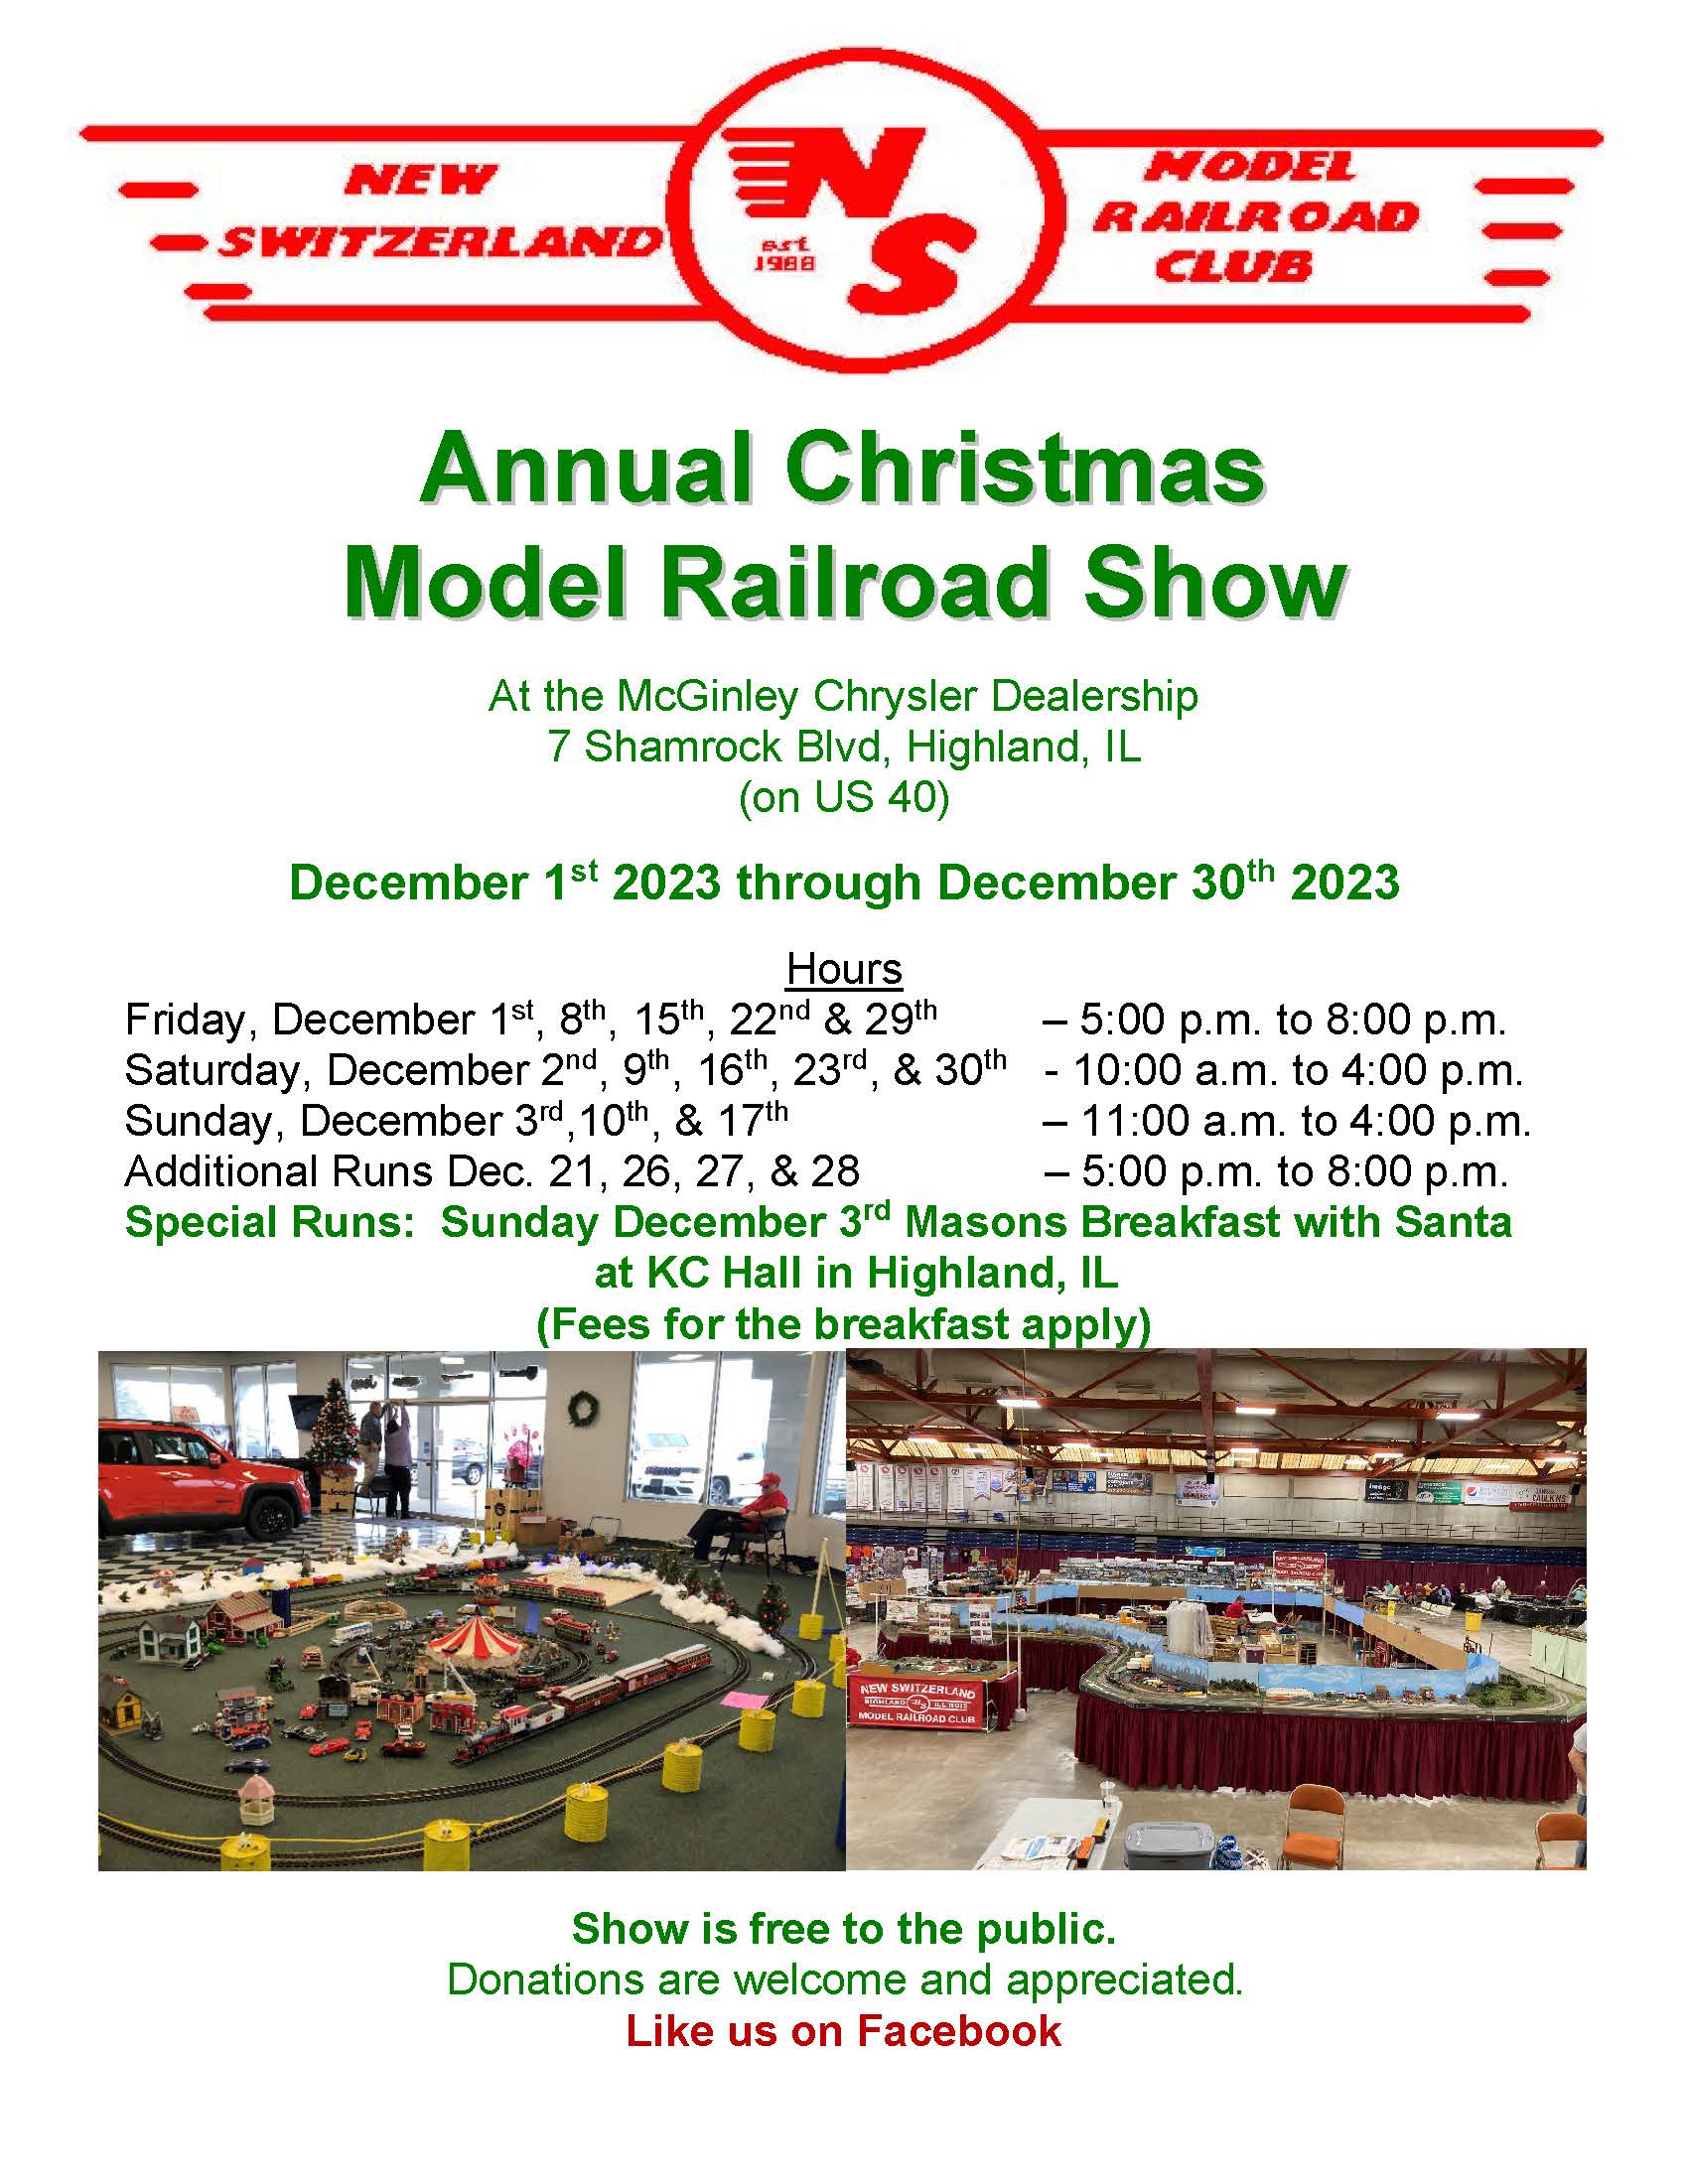 New Switzerland Model Railroad Club Christmas Model Railroad Show